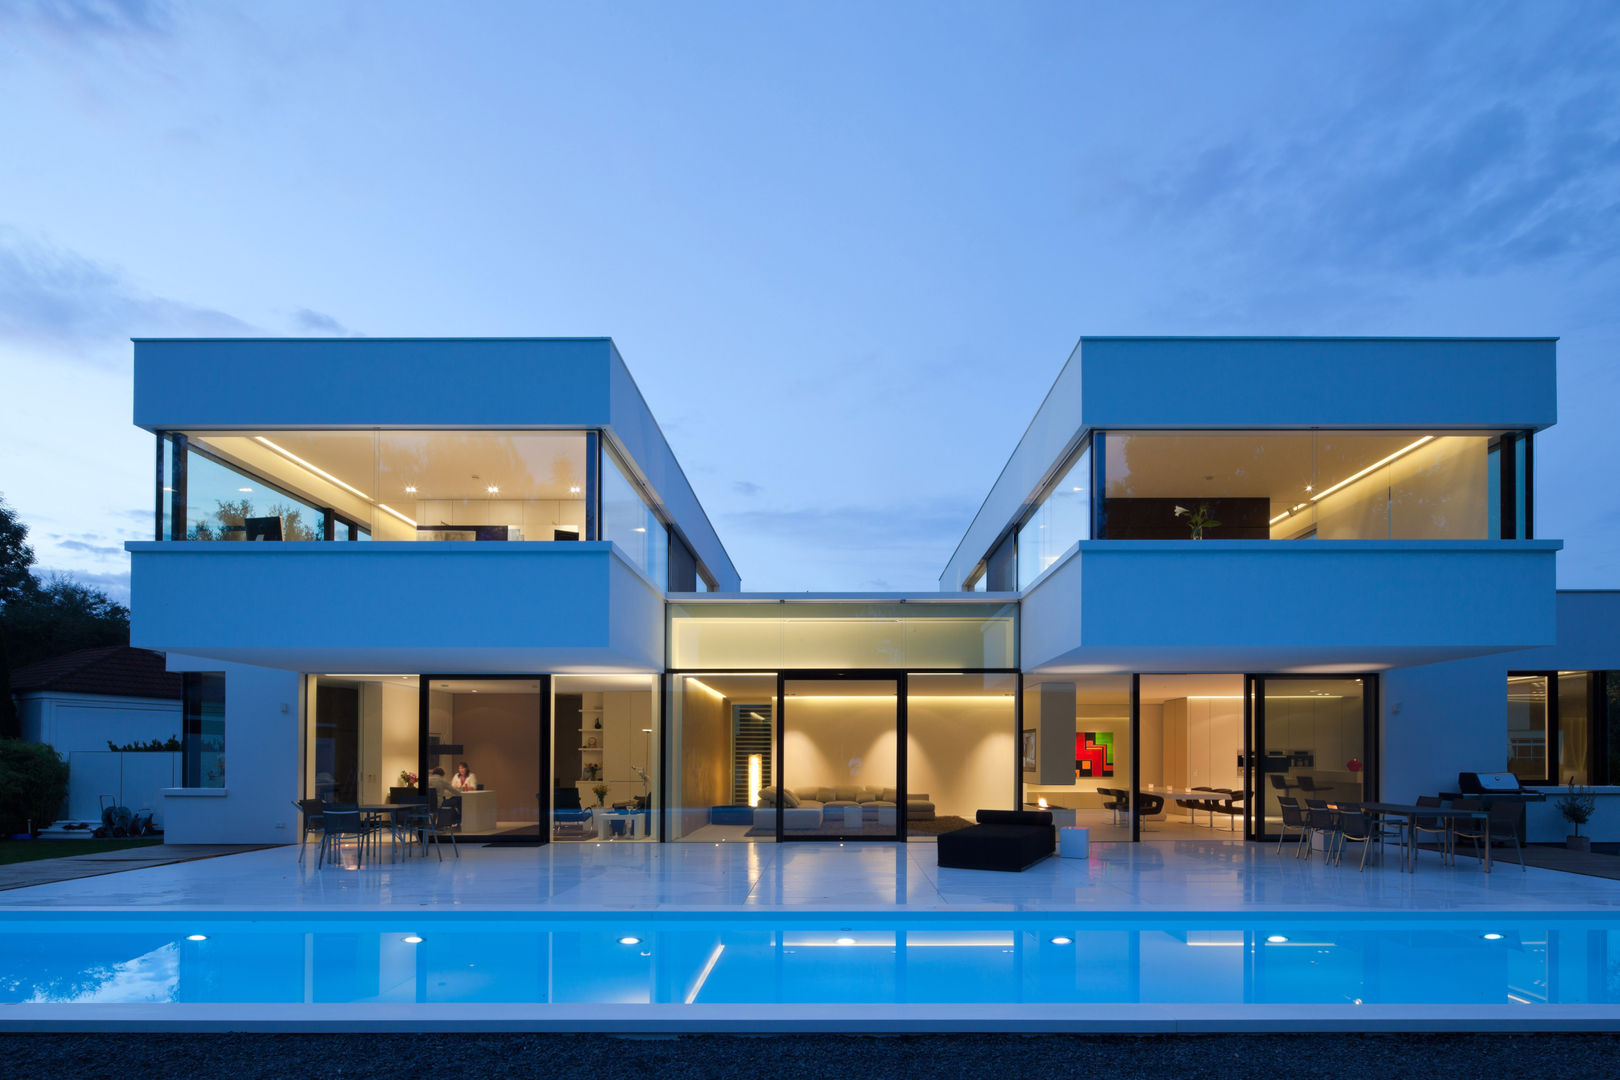 Moderne Villa im Bauhausstil, HI-MACS® HI-MACS® Rumah Modern